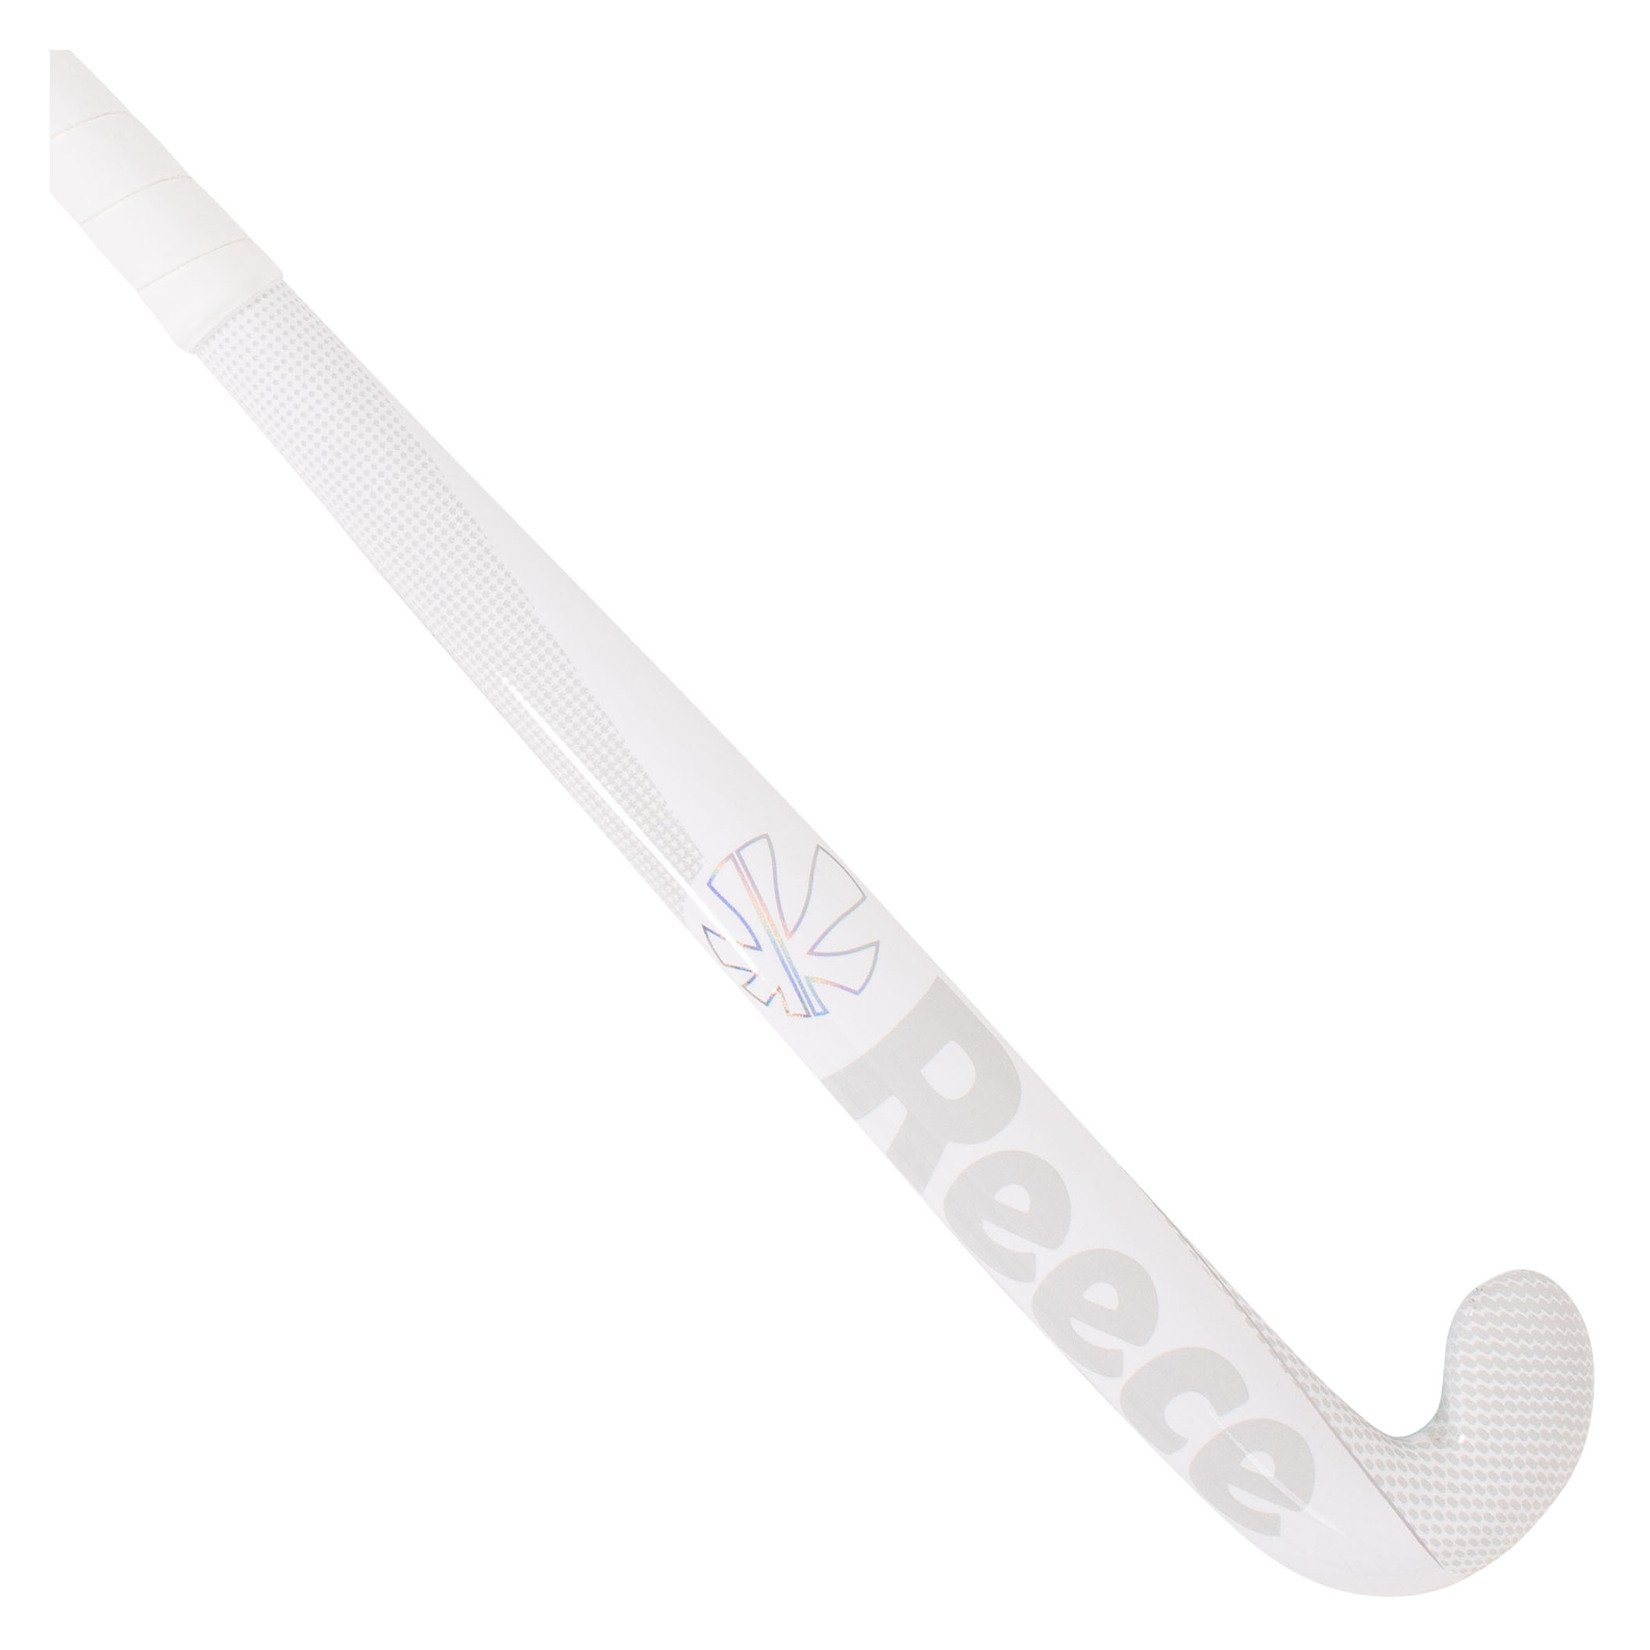 Reece Blizzard 500 Hockey Stick